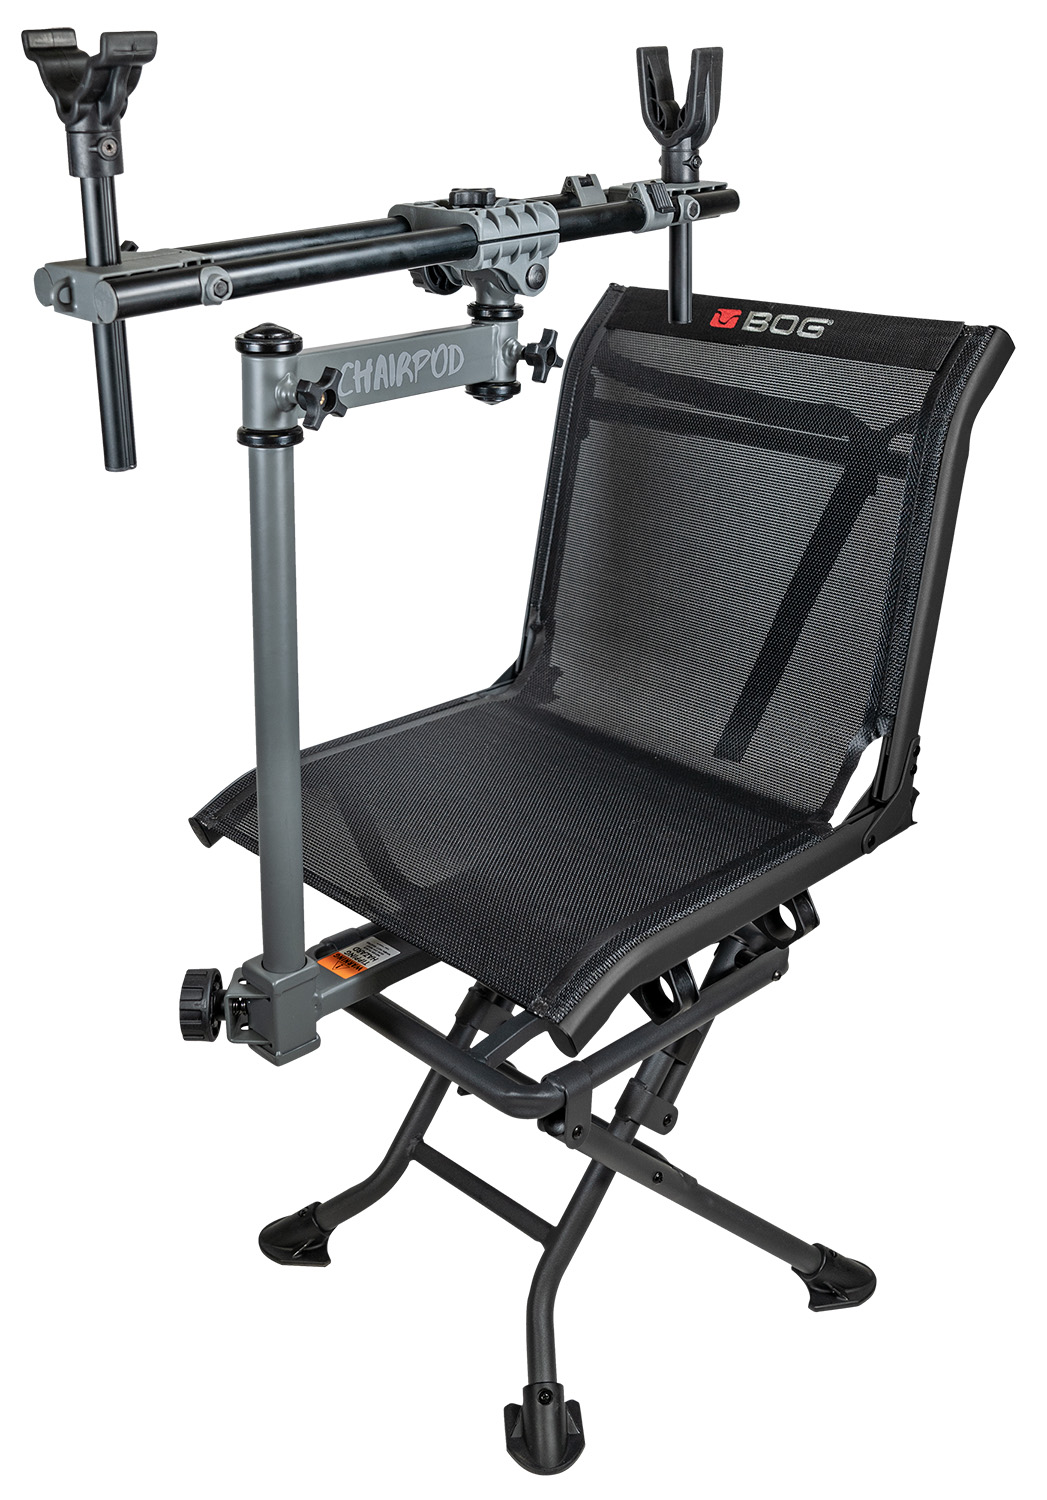 Bog-Pod 1100475 ChairPod Chair With Rotating Gun Mount, 4 Legs, Black, Aluminum Frame, 41" Max Height